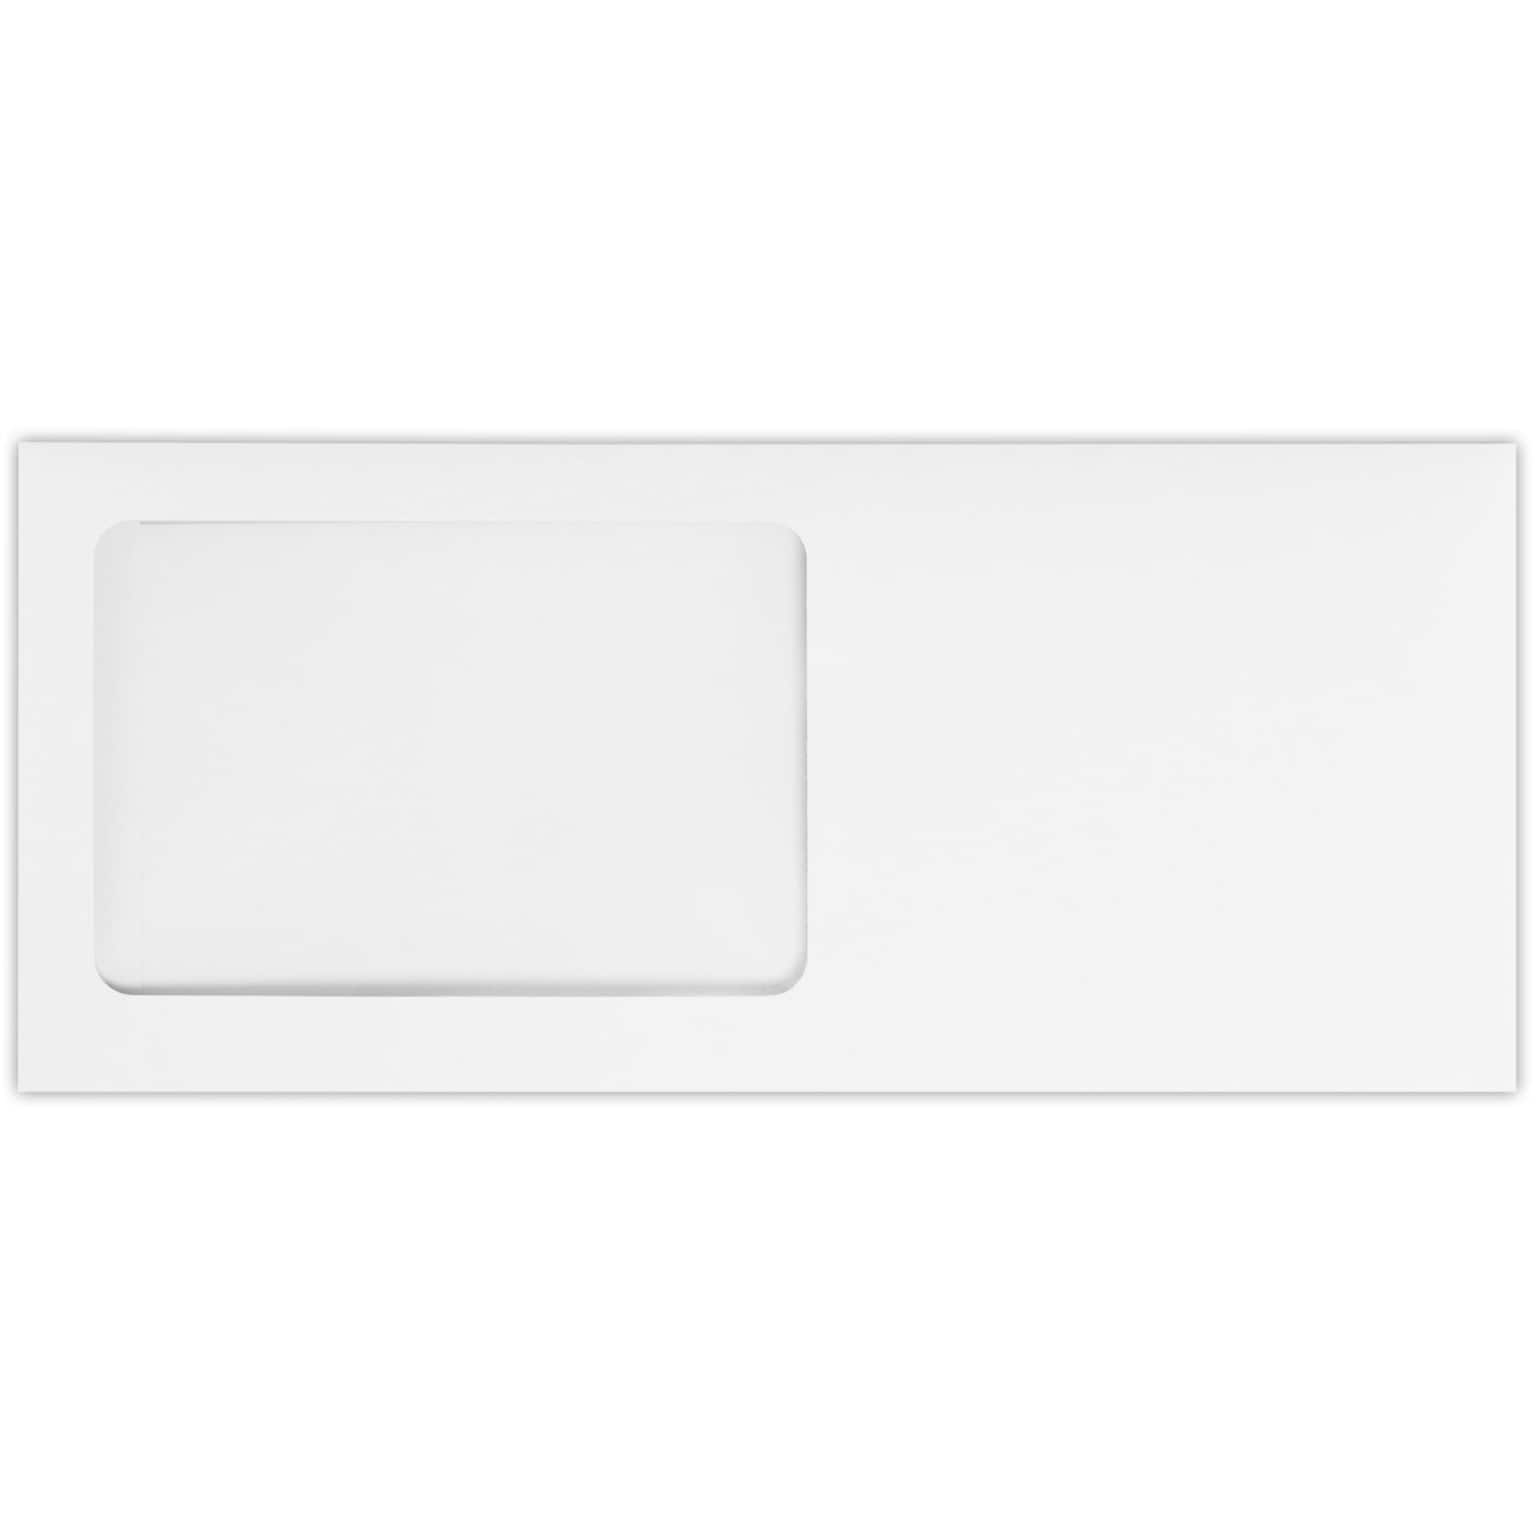 LUX Self Seal #10 Window Envelope, 4 1/2 x 9 1/2, White Wove, 250/Pack (10APW-WW-250)